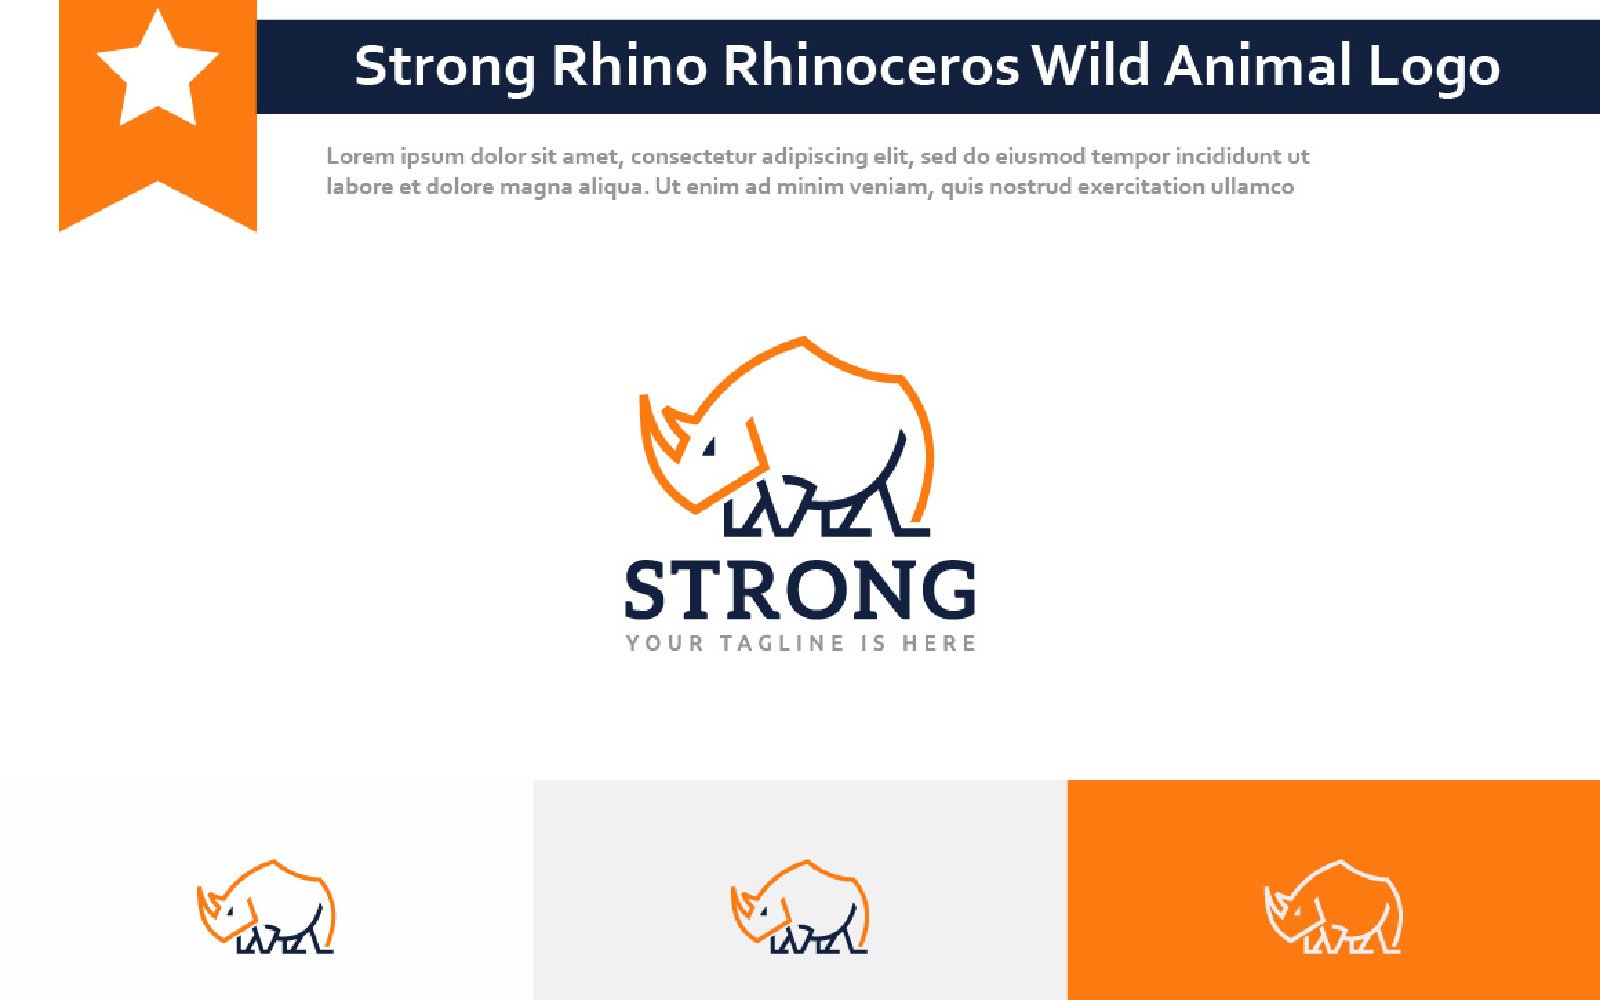 Kit Graphique #281609 Strong Rhinocros Divers Modles Web - Logo template Preview